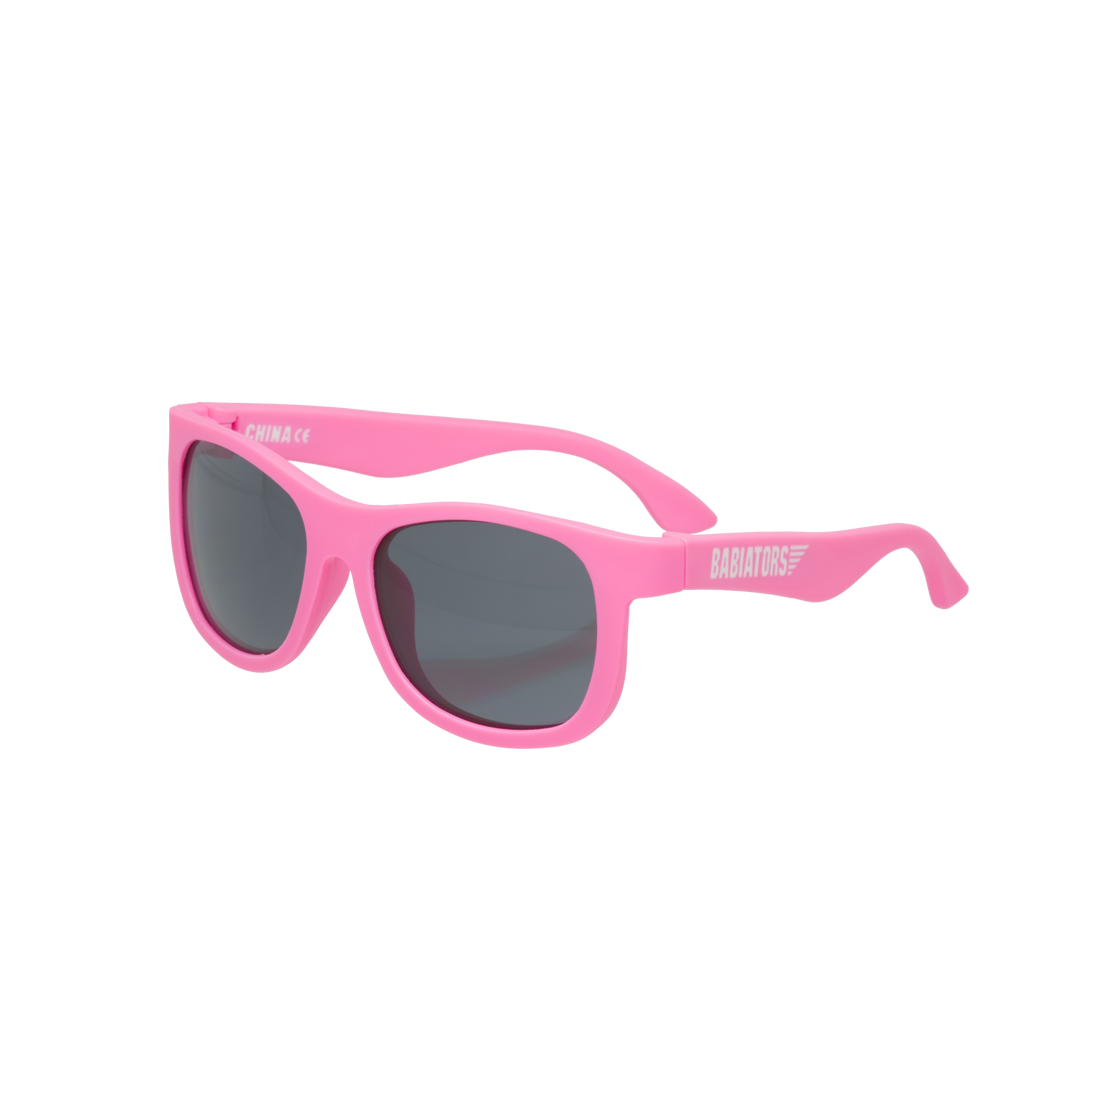 Navigator Kids Sunglasses in Think Pink